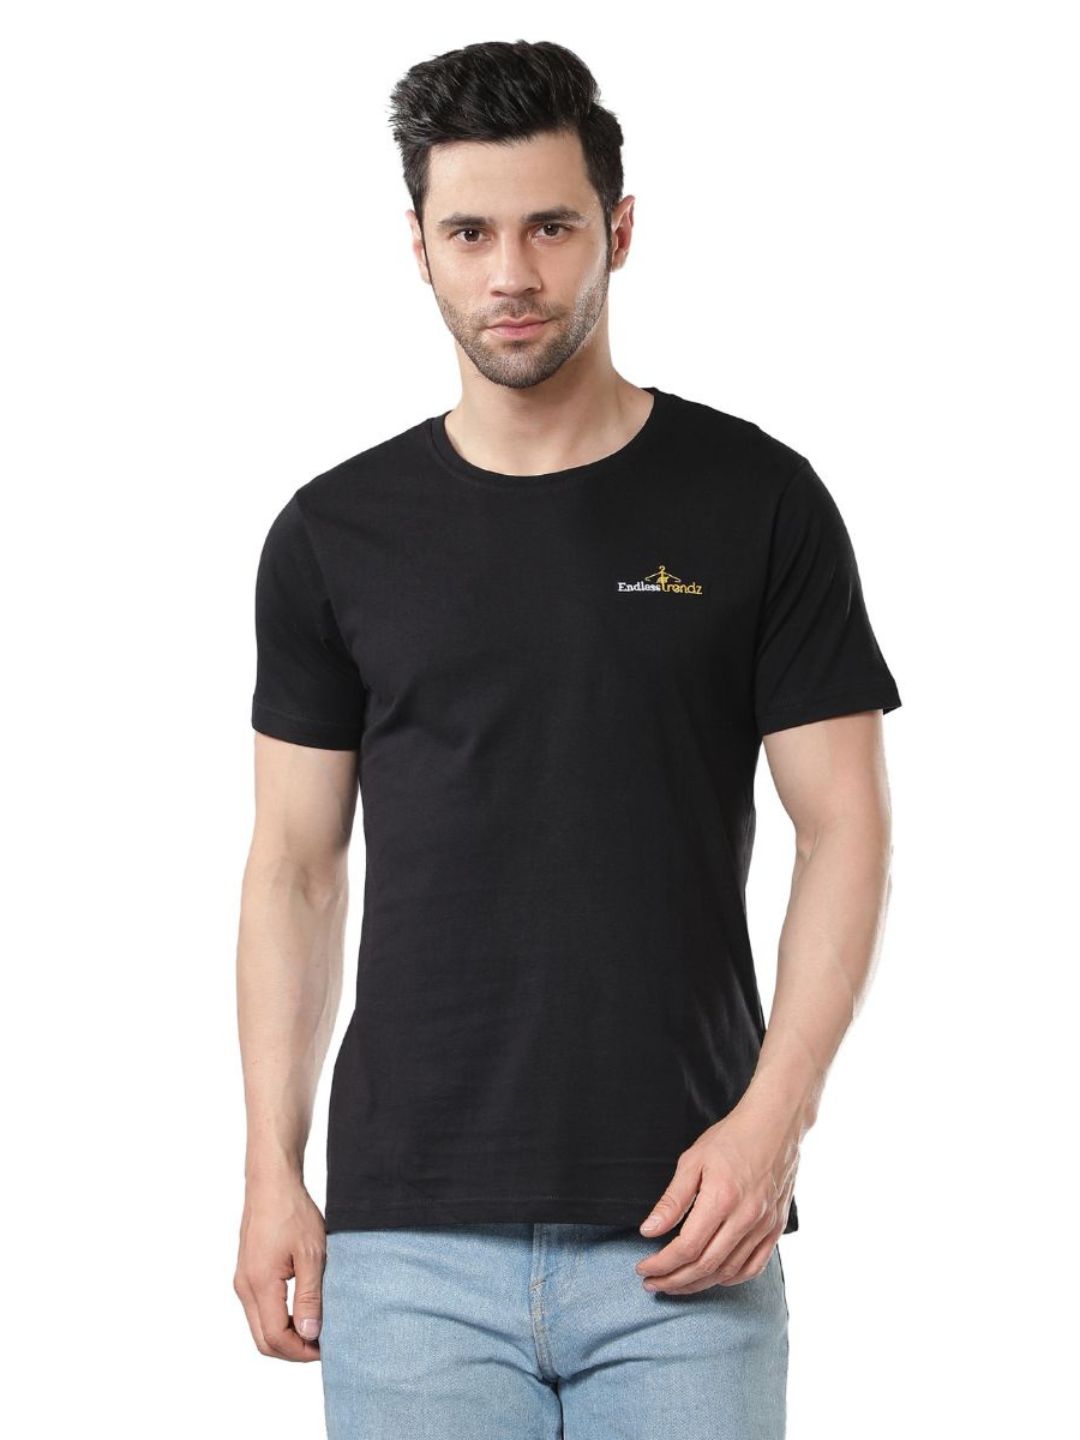 Endless Trendz Short Sleeves Round Neck Black T-Shirt